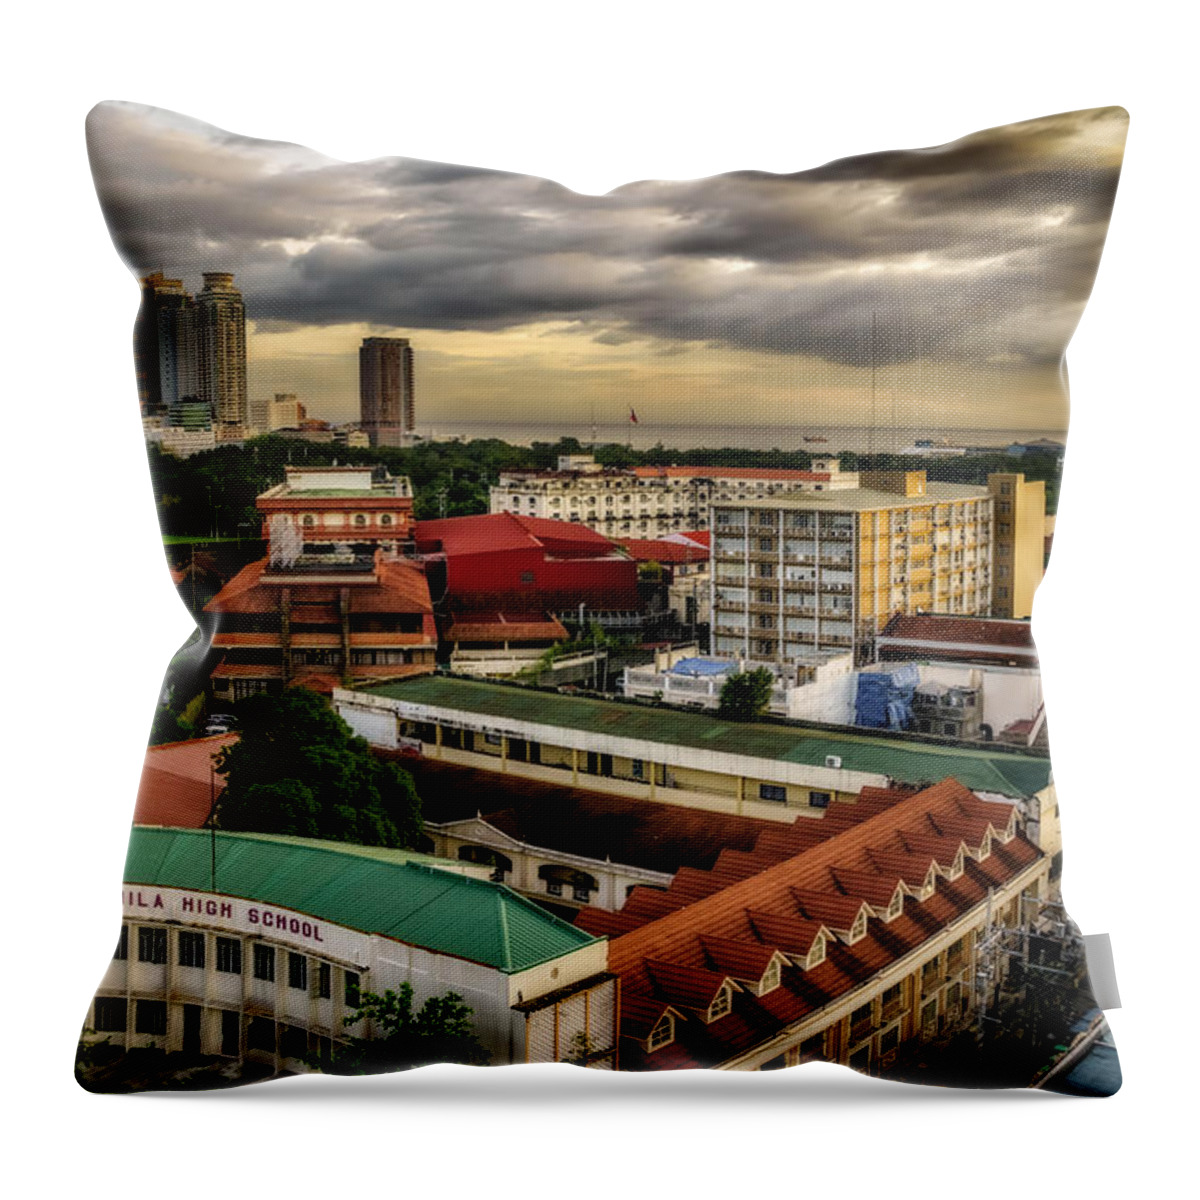 Manila Throw Pillow featuring the photograph Manila High School by Adrian Evans